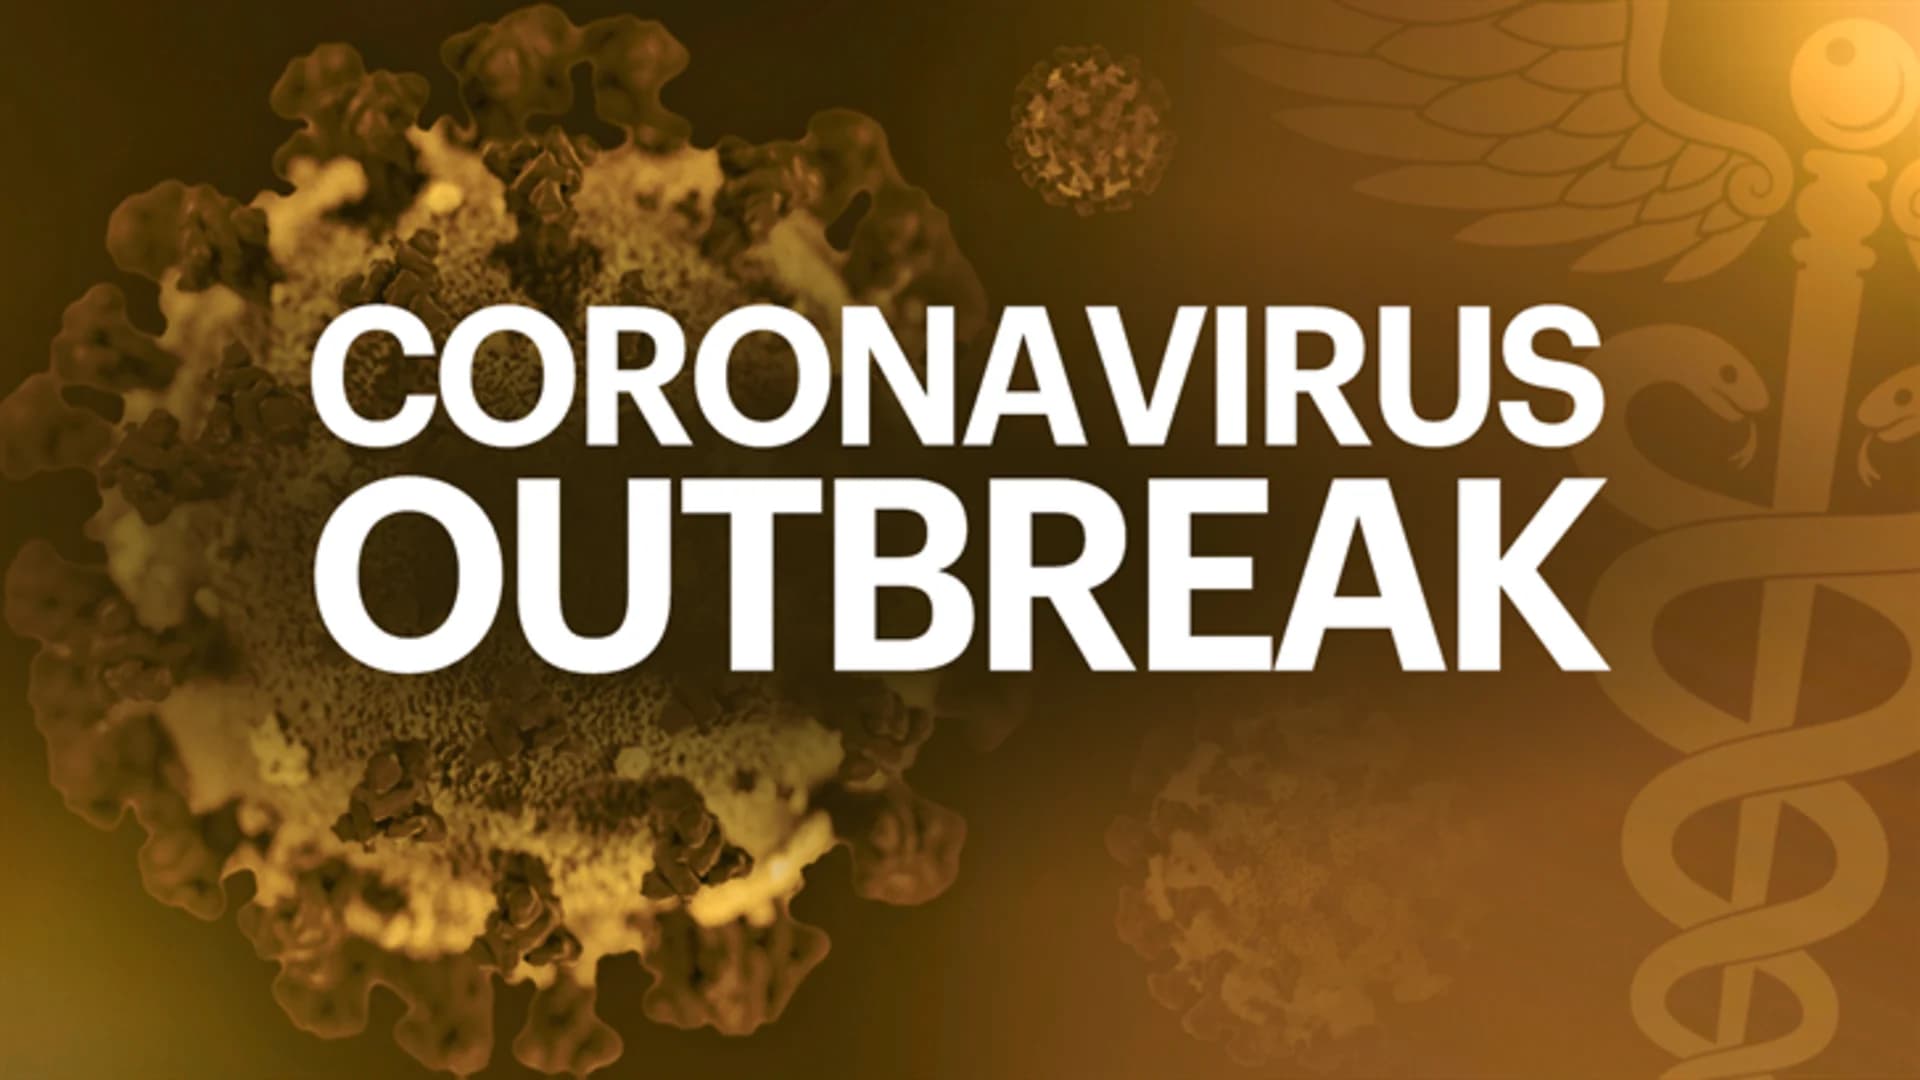 Mayor Bill de Blasio holds news conference on suspected coronavirus case - Live Video